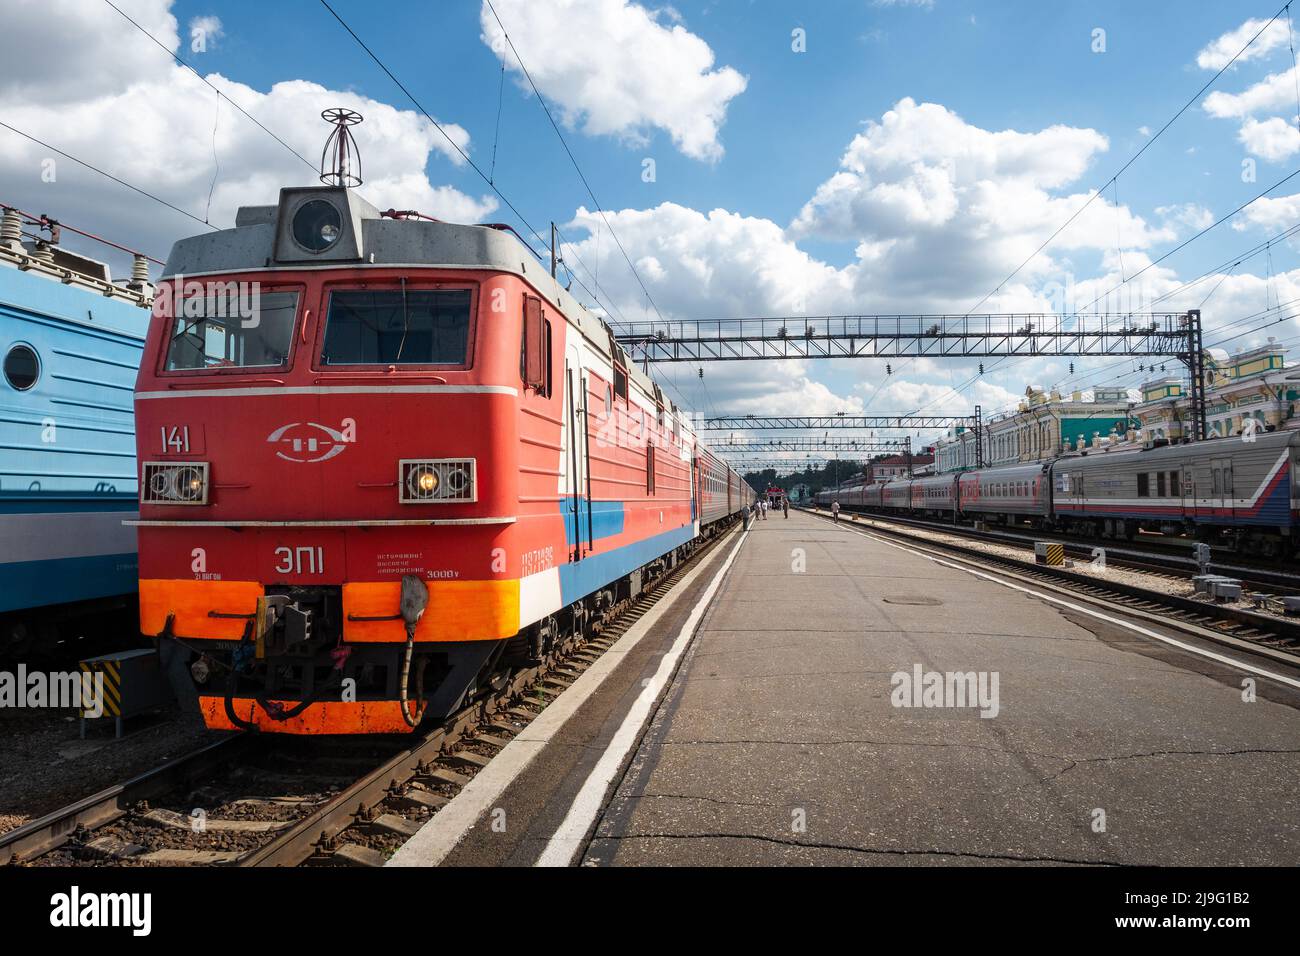 Trains at the Irkutsk-Passazhirsky railway station in the city of Irkutsk in Russia, an important stop along the Trans-Siberian Railway. Stock Photo